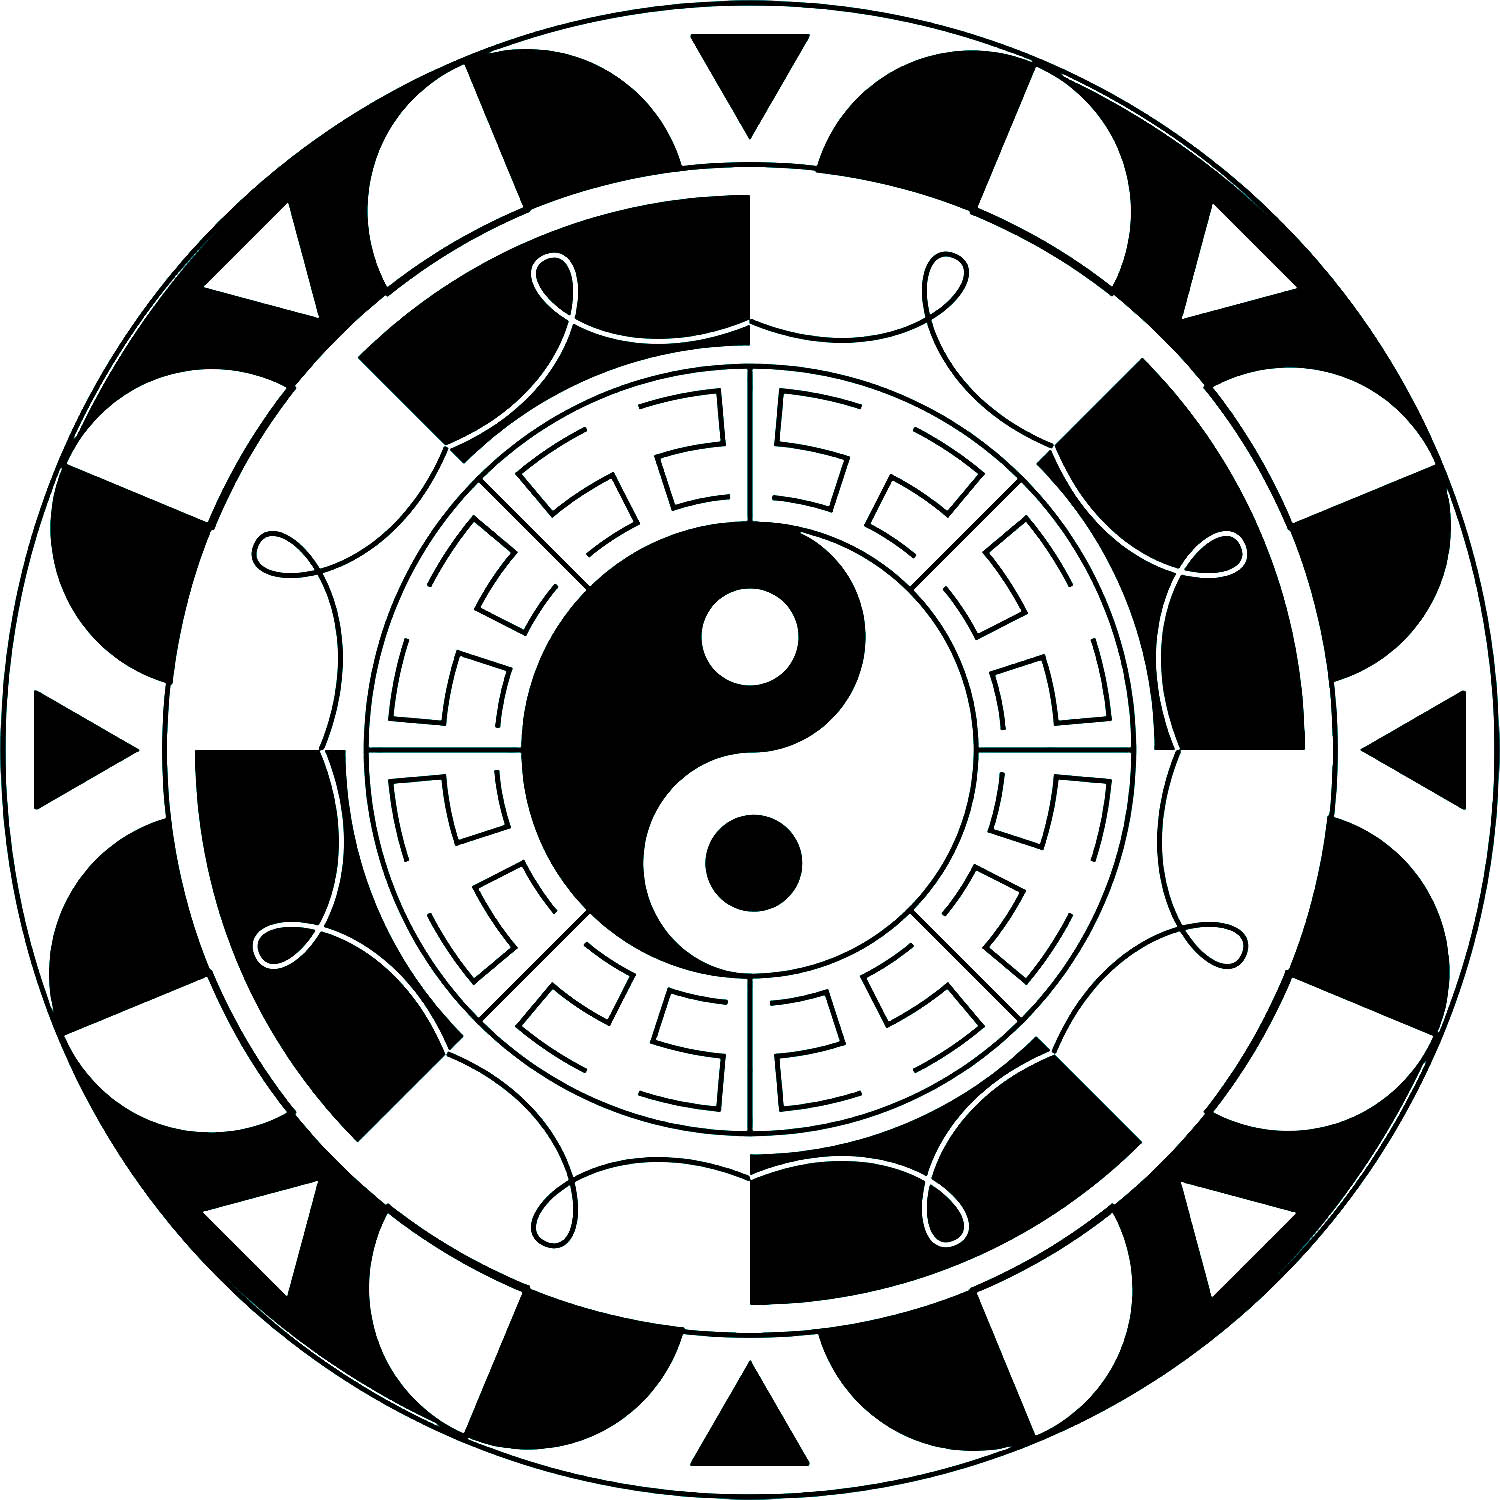 Yin & Yang Symbol in a simple black & white Mandala